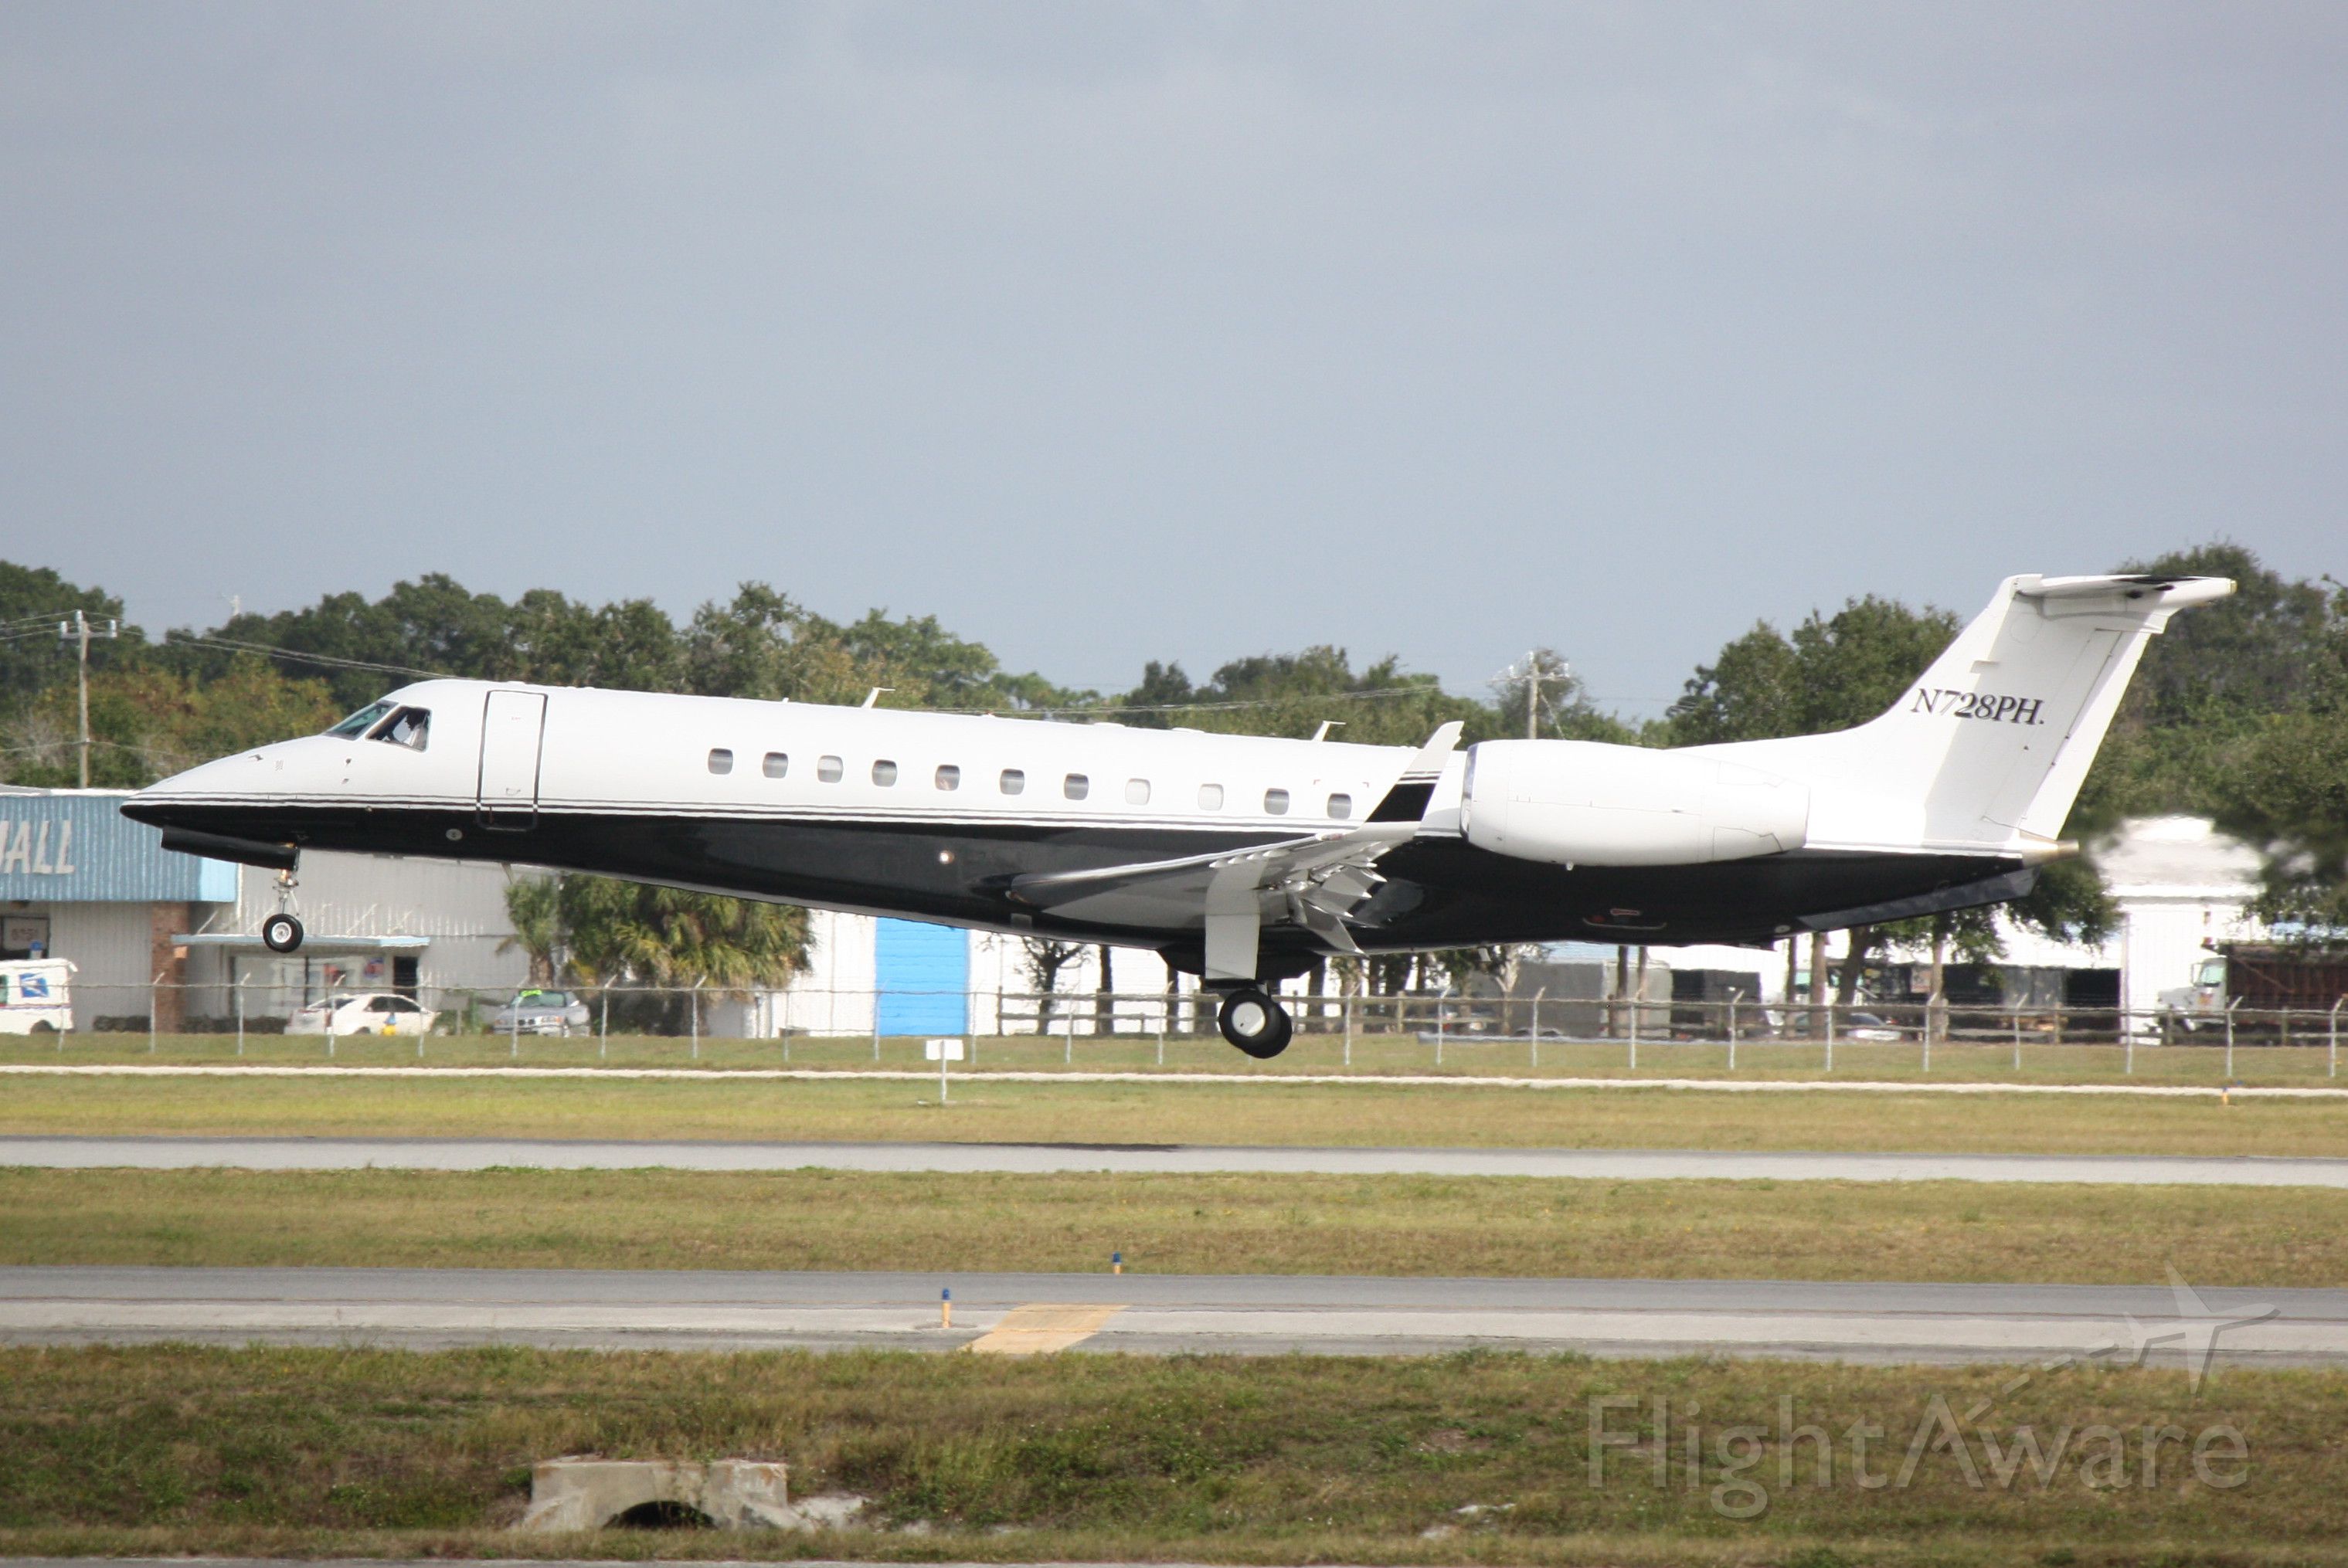 Embraer ERJ-135 (N728PH) - Embraer 135 (N728PH) arrives at Sarasota-Bradenton International Airport following a flight from Westchester County Airport